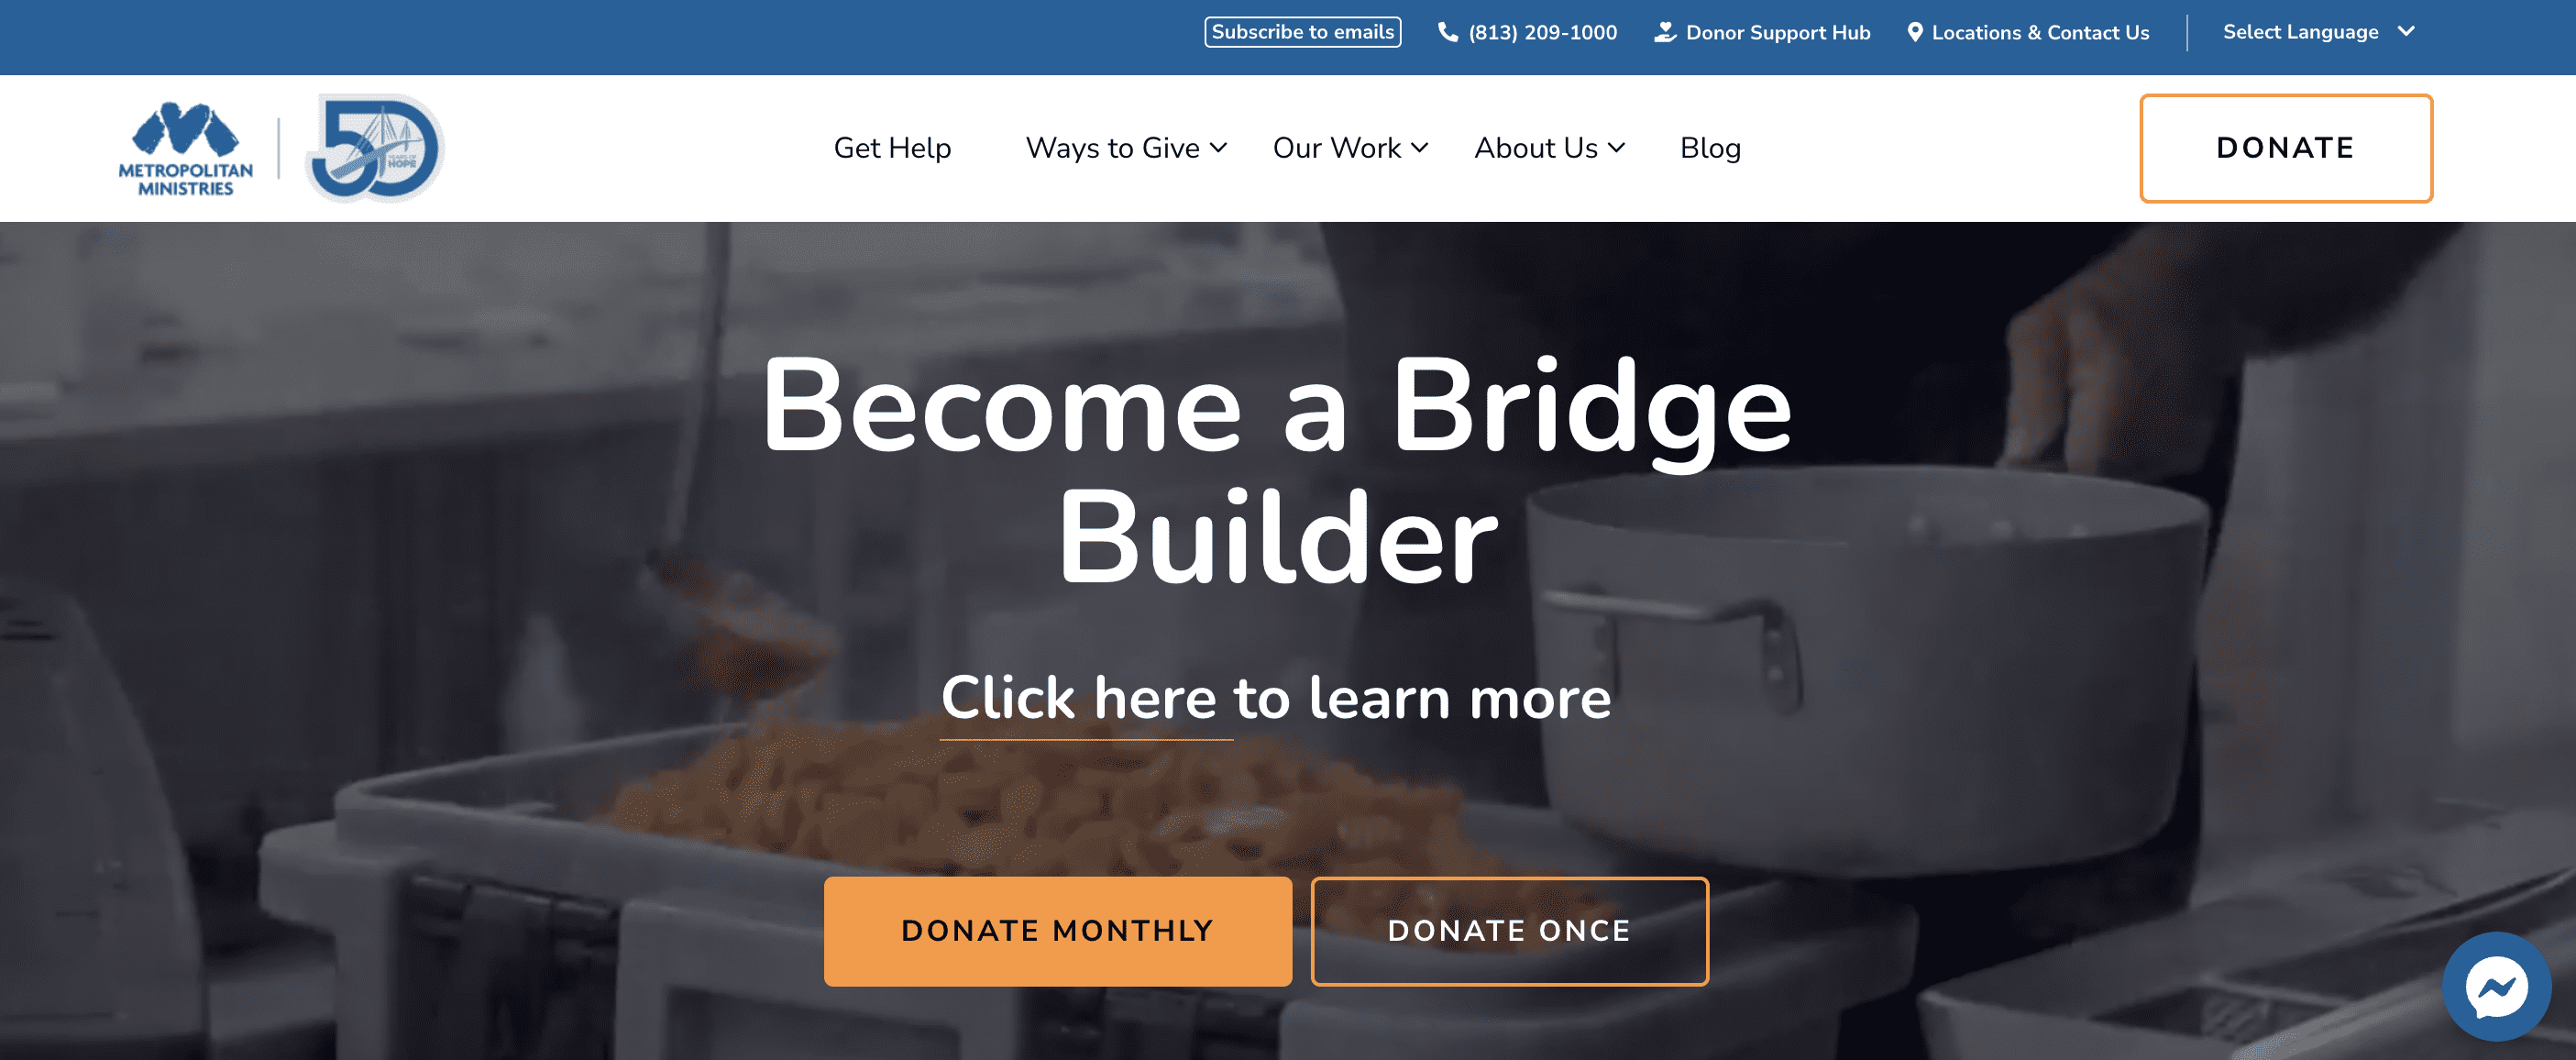 The homepage of the nonprofit Metropolitan Ministries